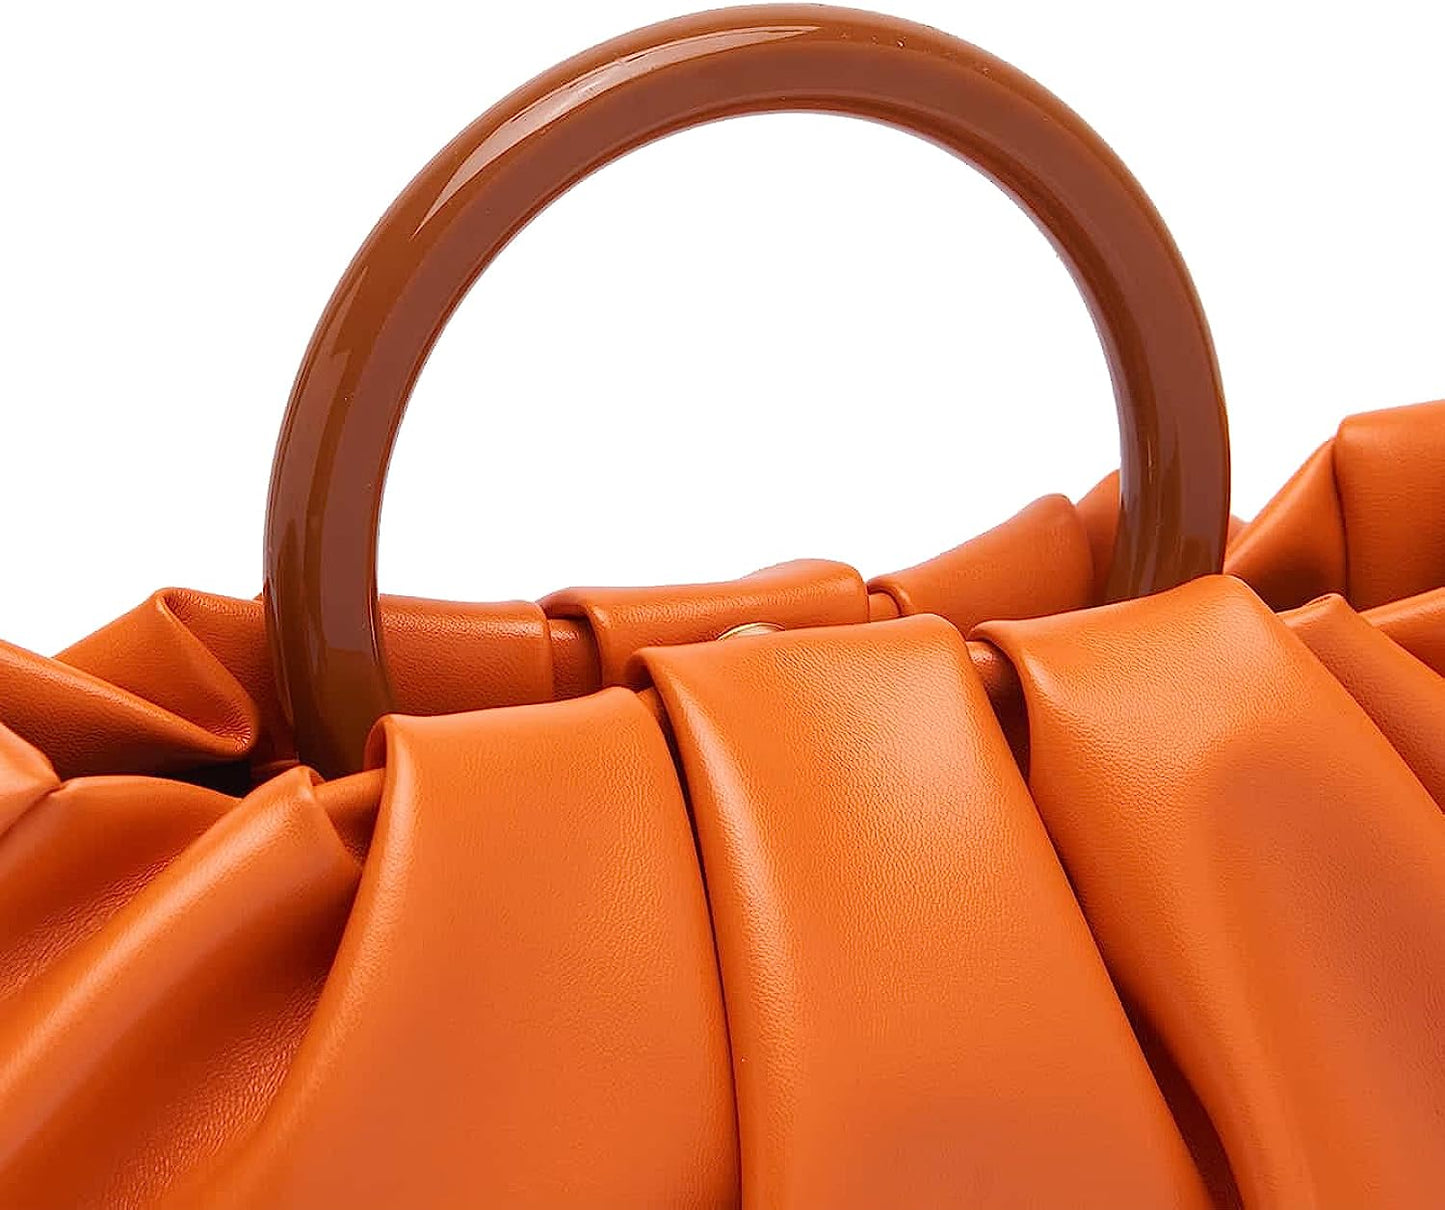 Women'S Ruched Small Handbag Clutch Purse Dumpling Pouch Bag